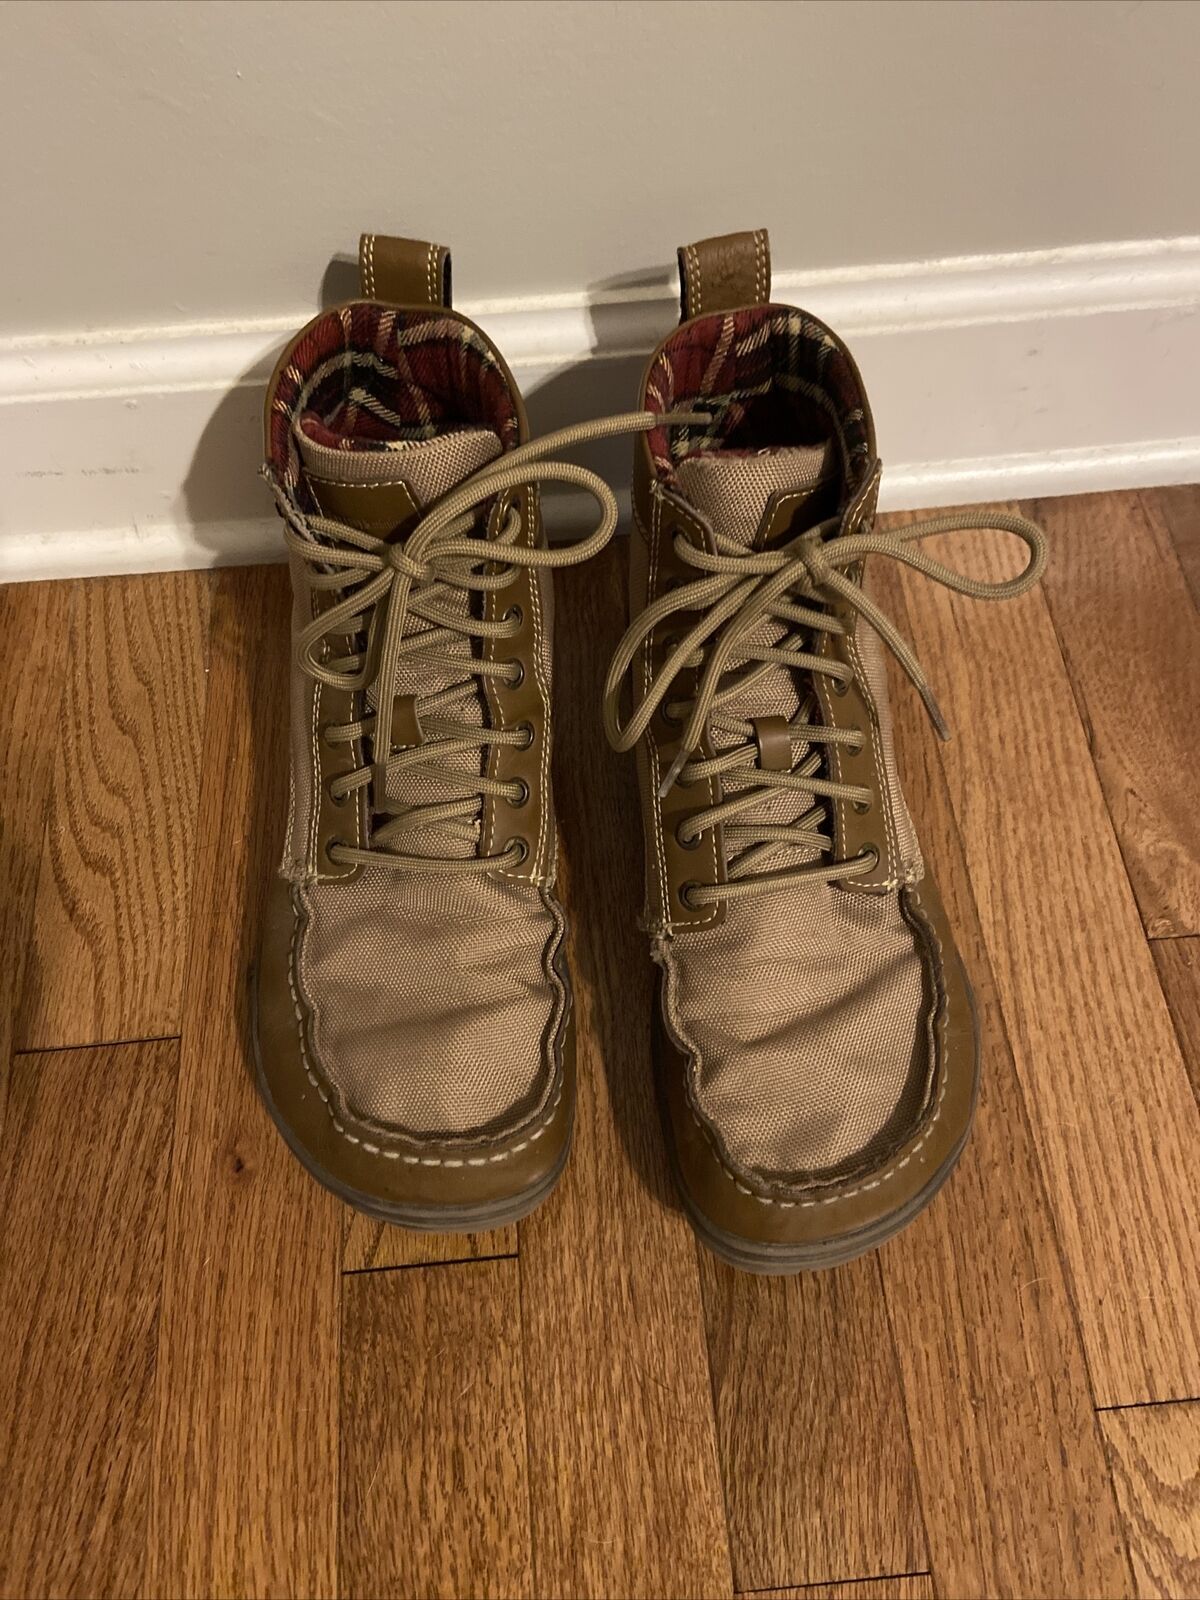 Lems Boulder Boots “Buckeye” Minimal Hiking Zero Drop Shoes Men’s Size 42EU 9